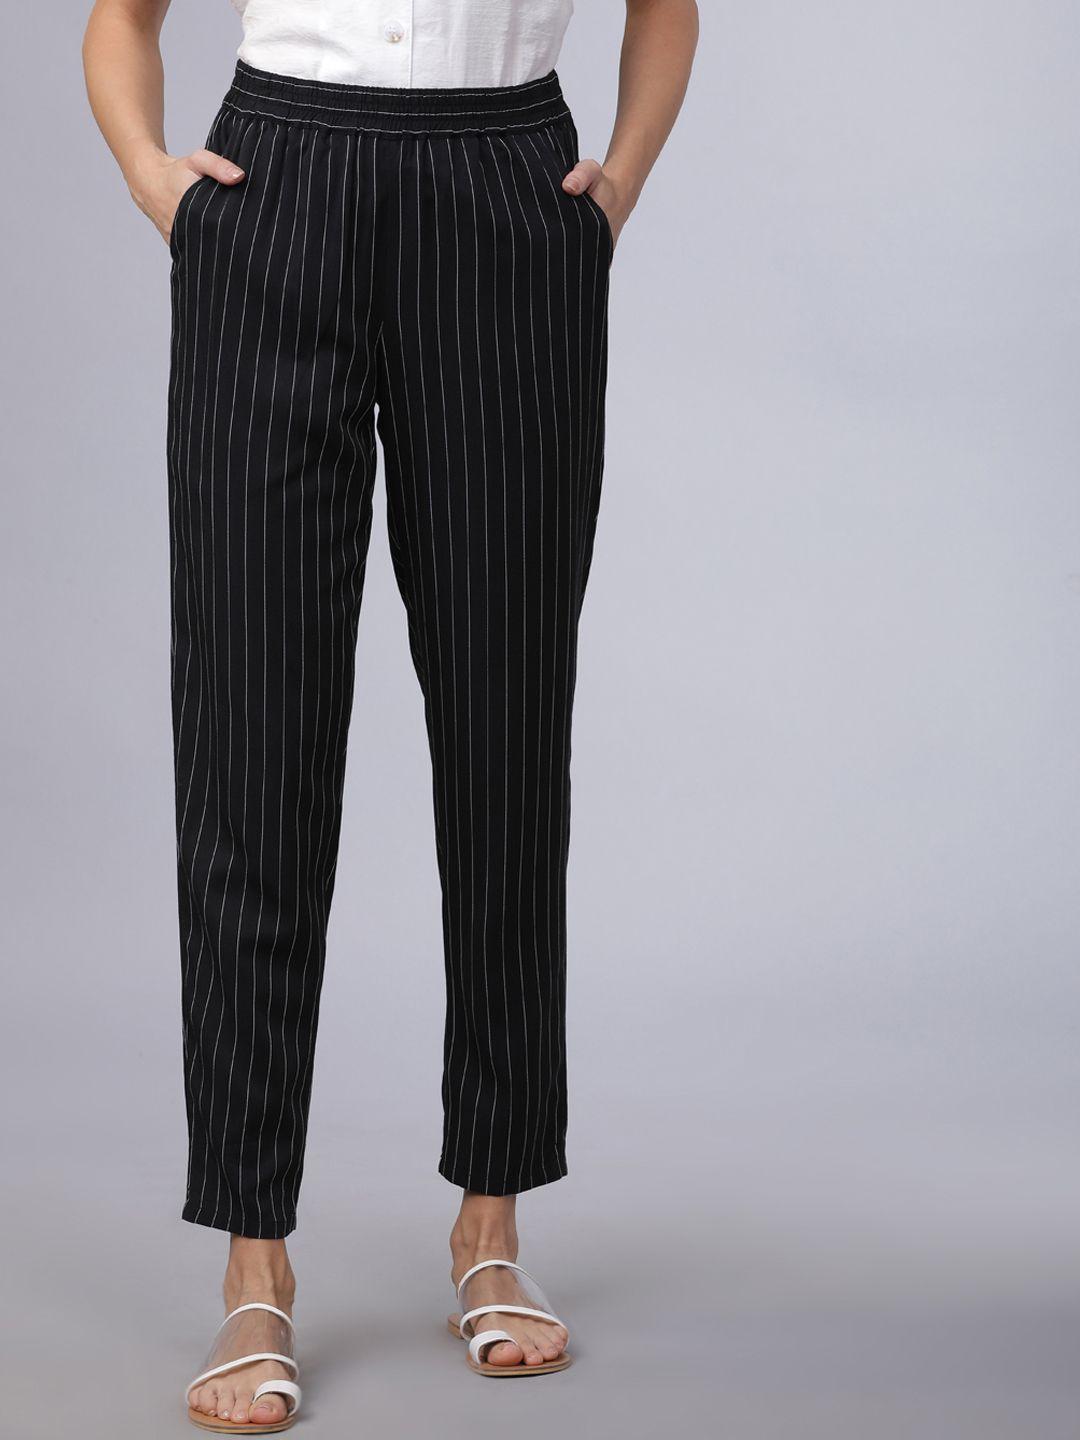 tokyo talkies women black & white straight fit striped peg trousers